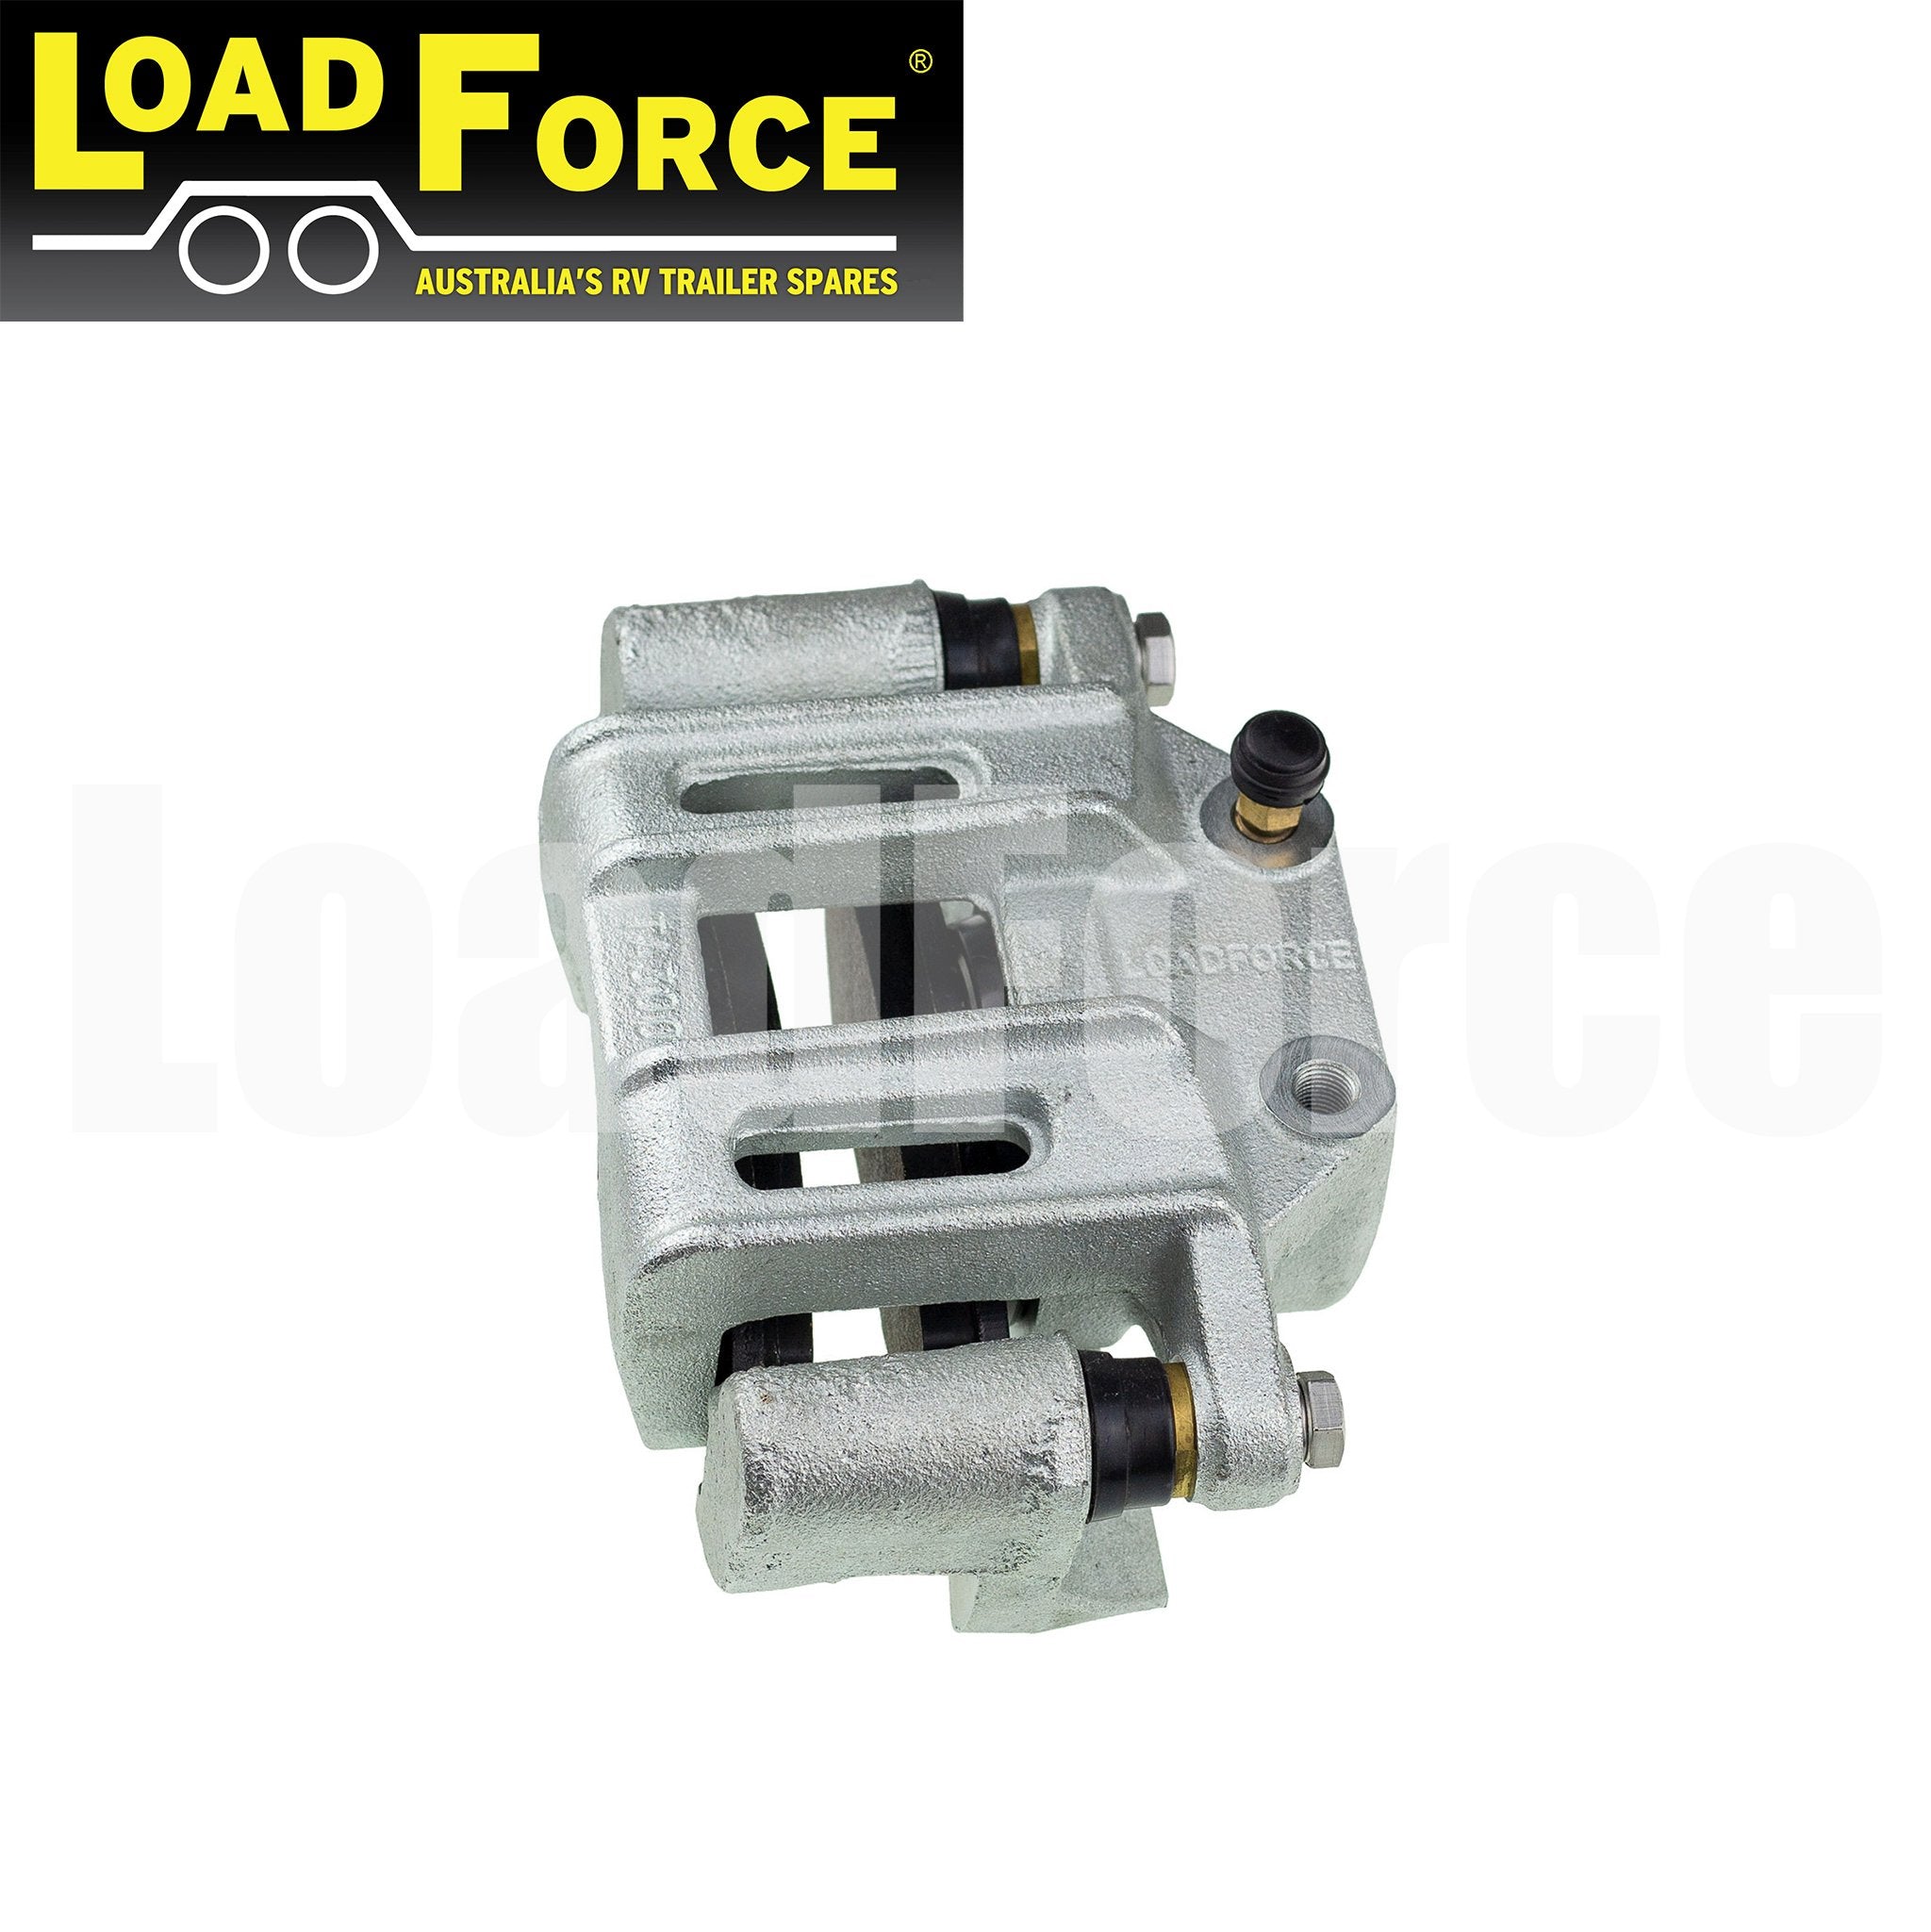 LoadForce TA300 hydraulic disc brake caliper with stainless piston - replaces Trojan AU